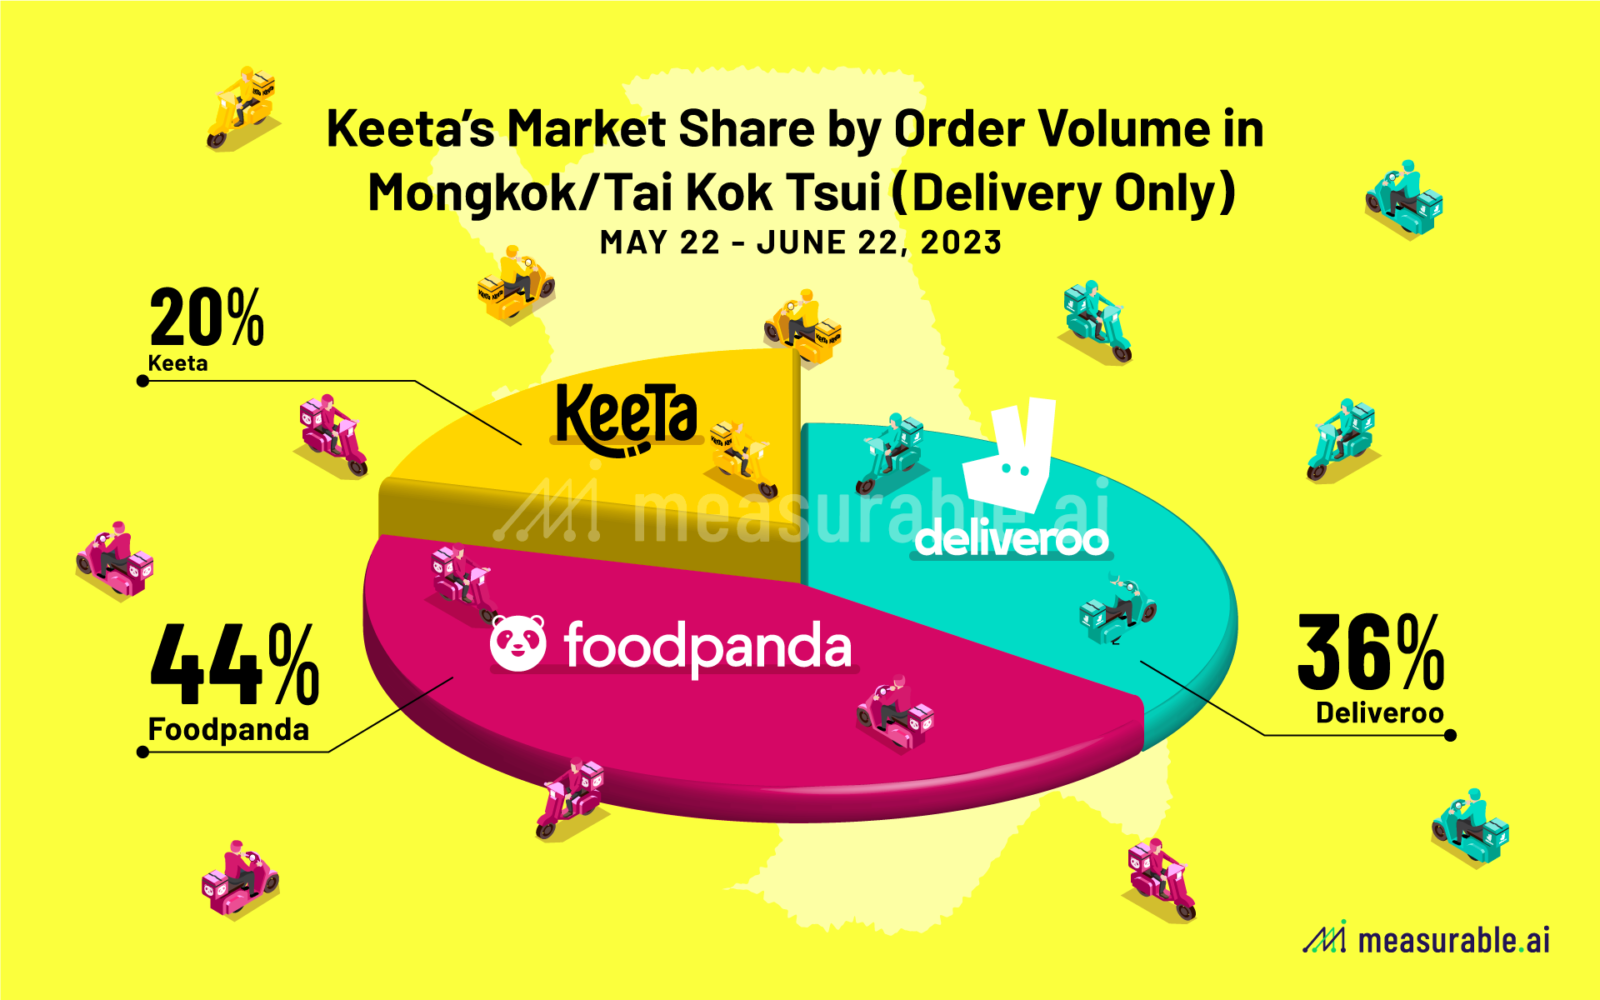 Keeta's Market Share by Order Volume in Mongkok / Tai Kok Tsui